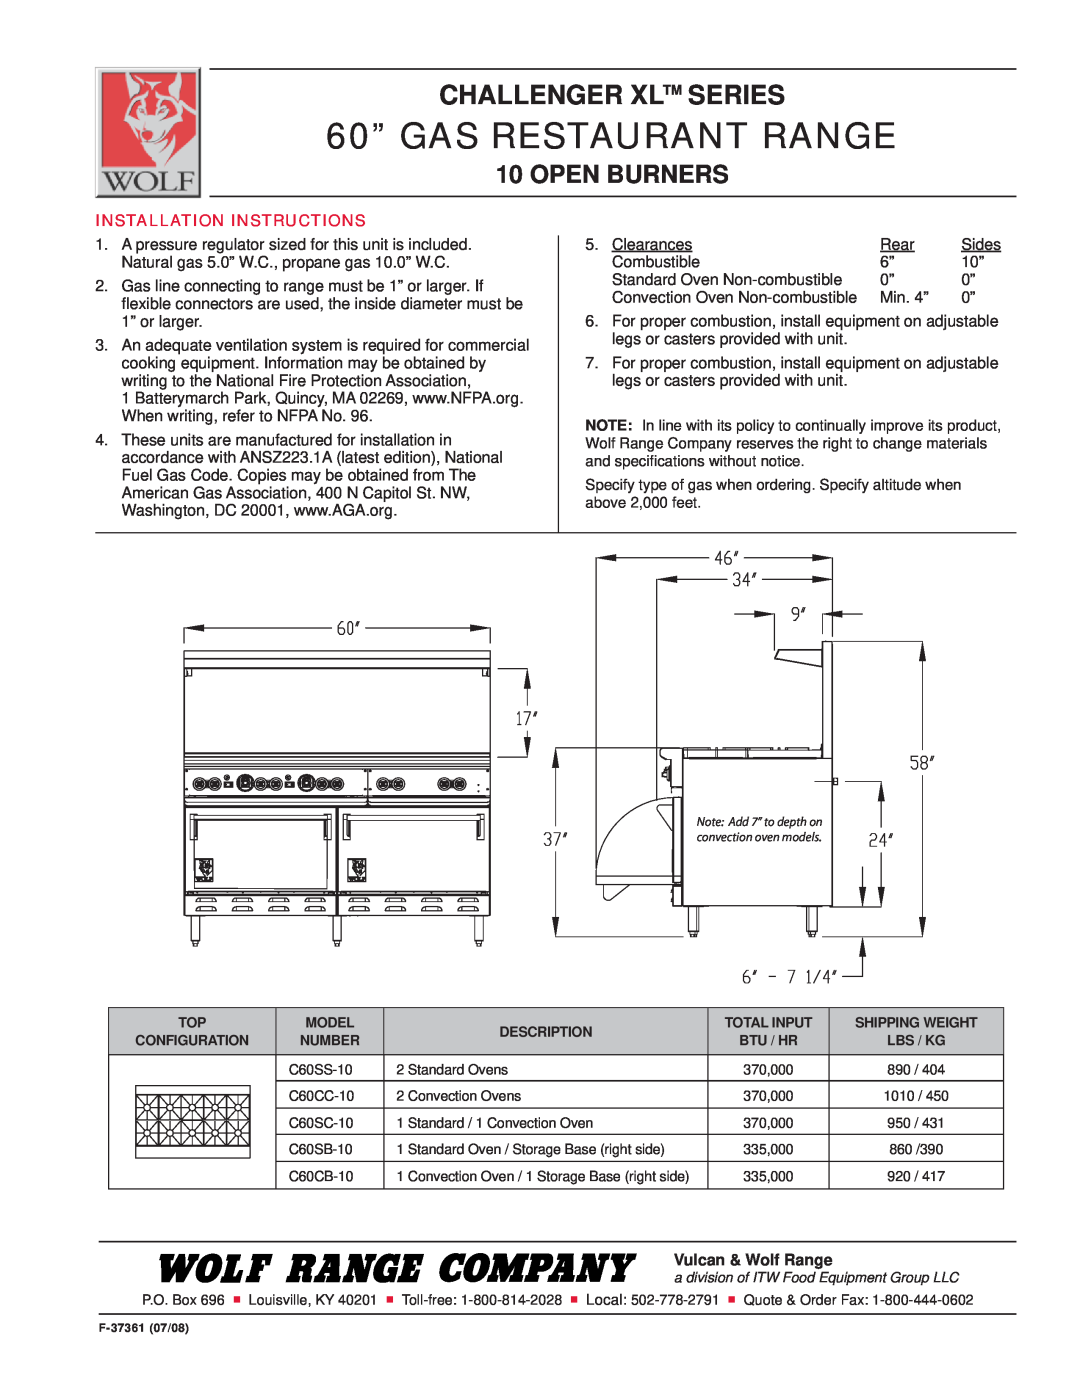 Wolf C60SC-10 Installation Instructions, 60” GAS RESTAURANT RANGE, Challenger Xl Series, Open Burners, Vulcan & Wolf Range 